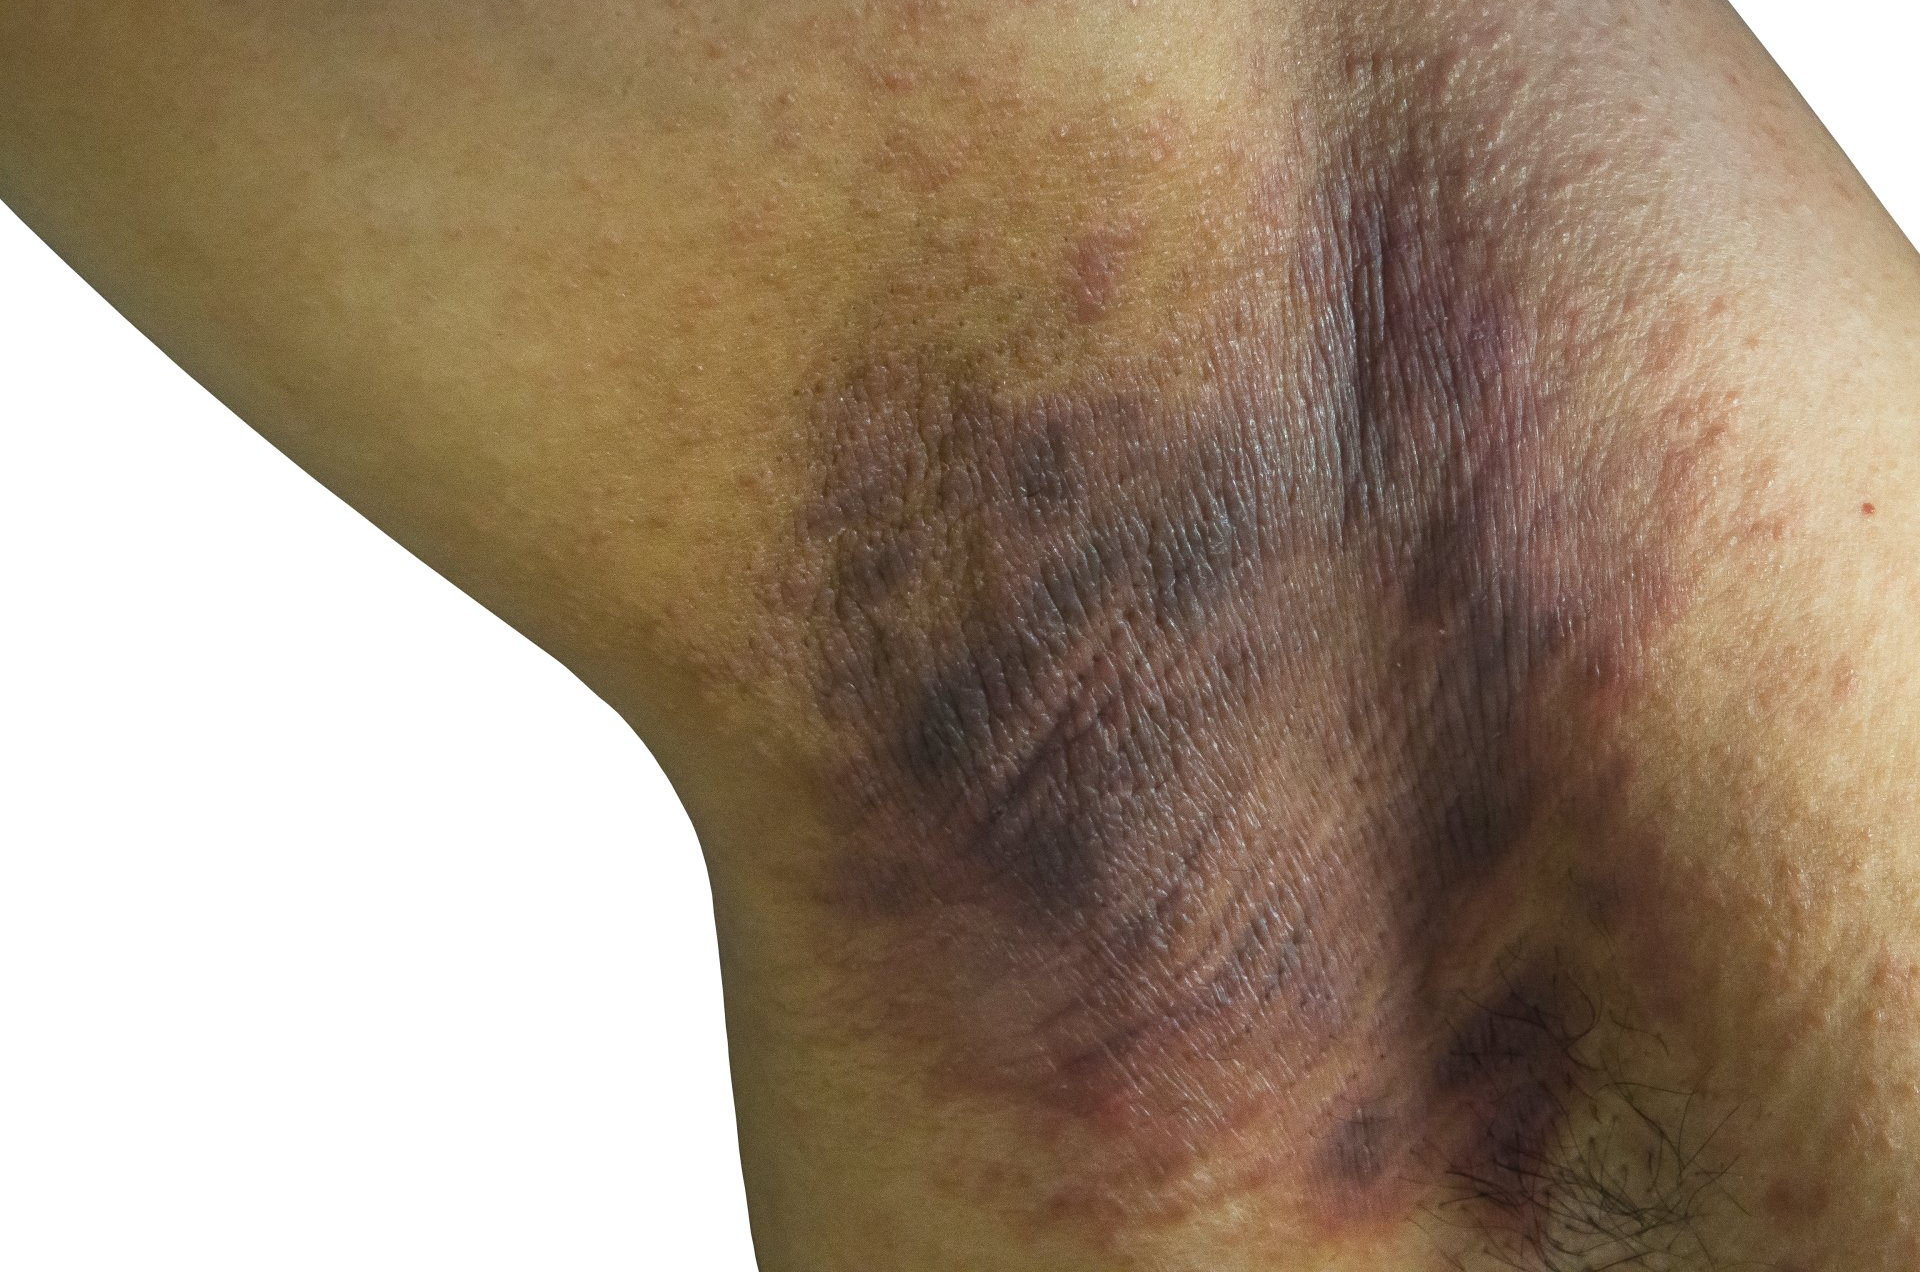 Hidradenitis suppurativa in a woman's under arm area